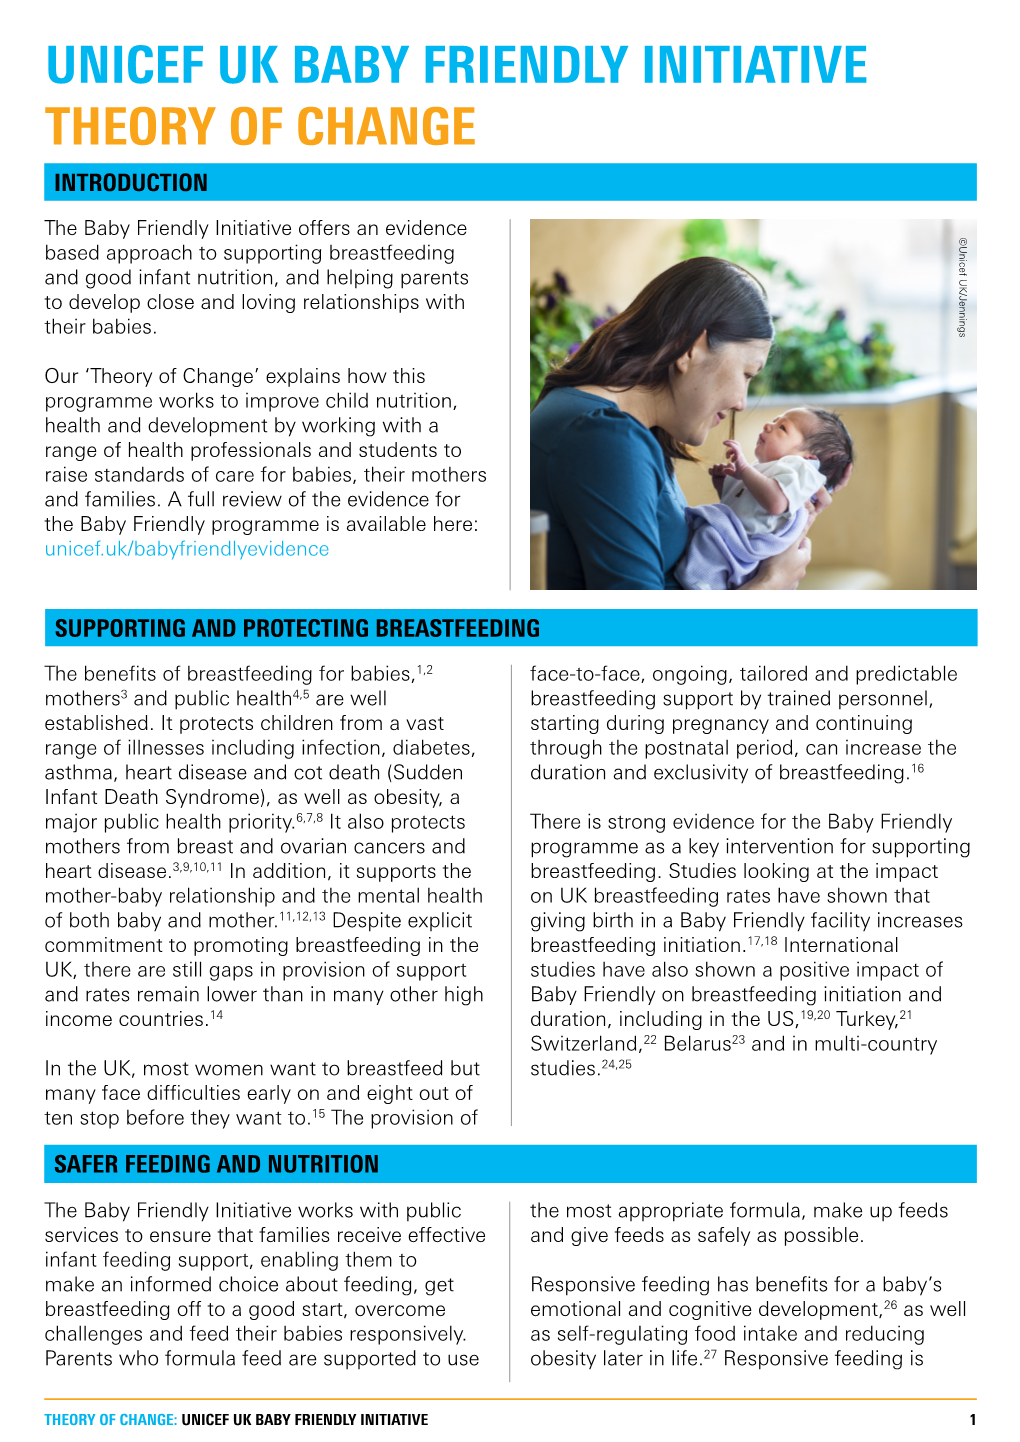 Unicef Uk Baby Friendly Initiative Theory of Change Introduction